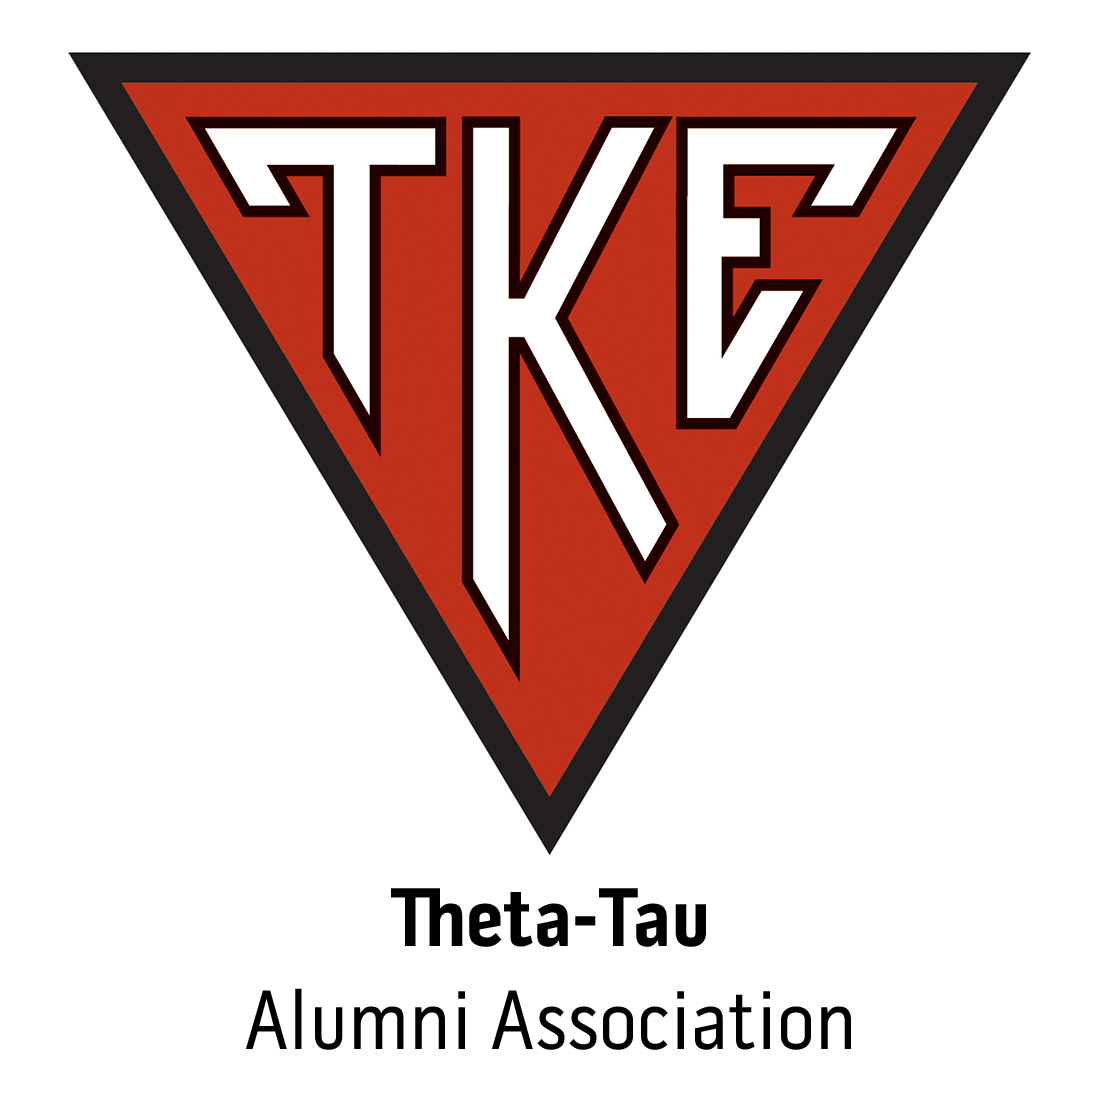 Theta-Tau Alumni Association at Minnesota State University, Mankato